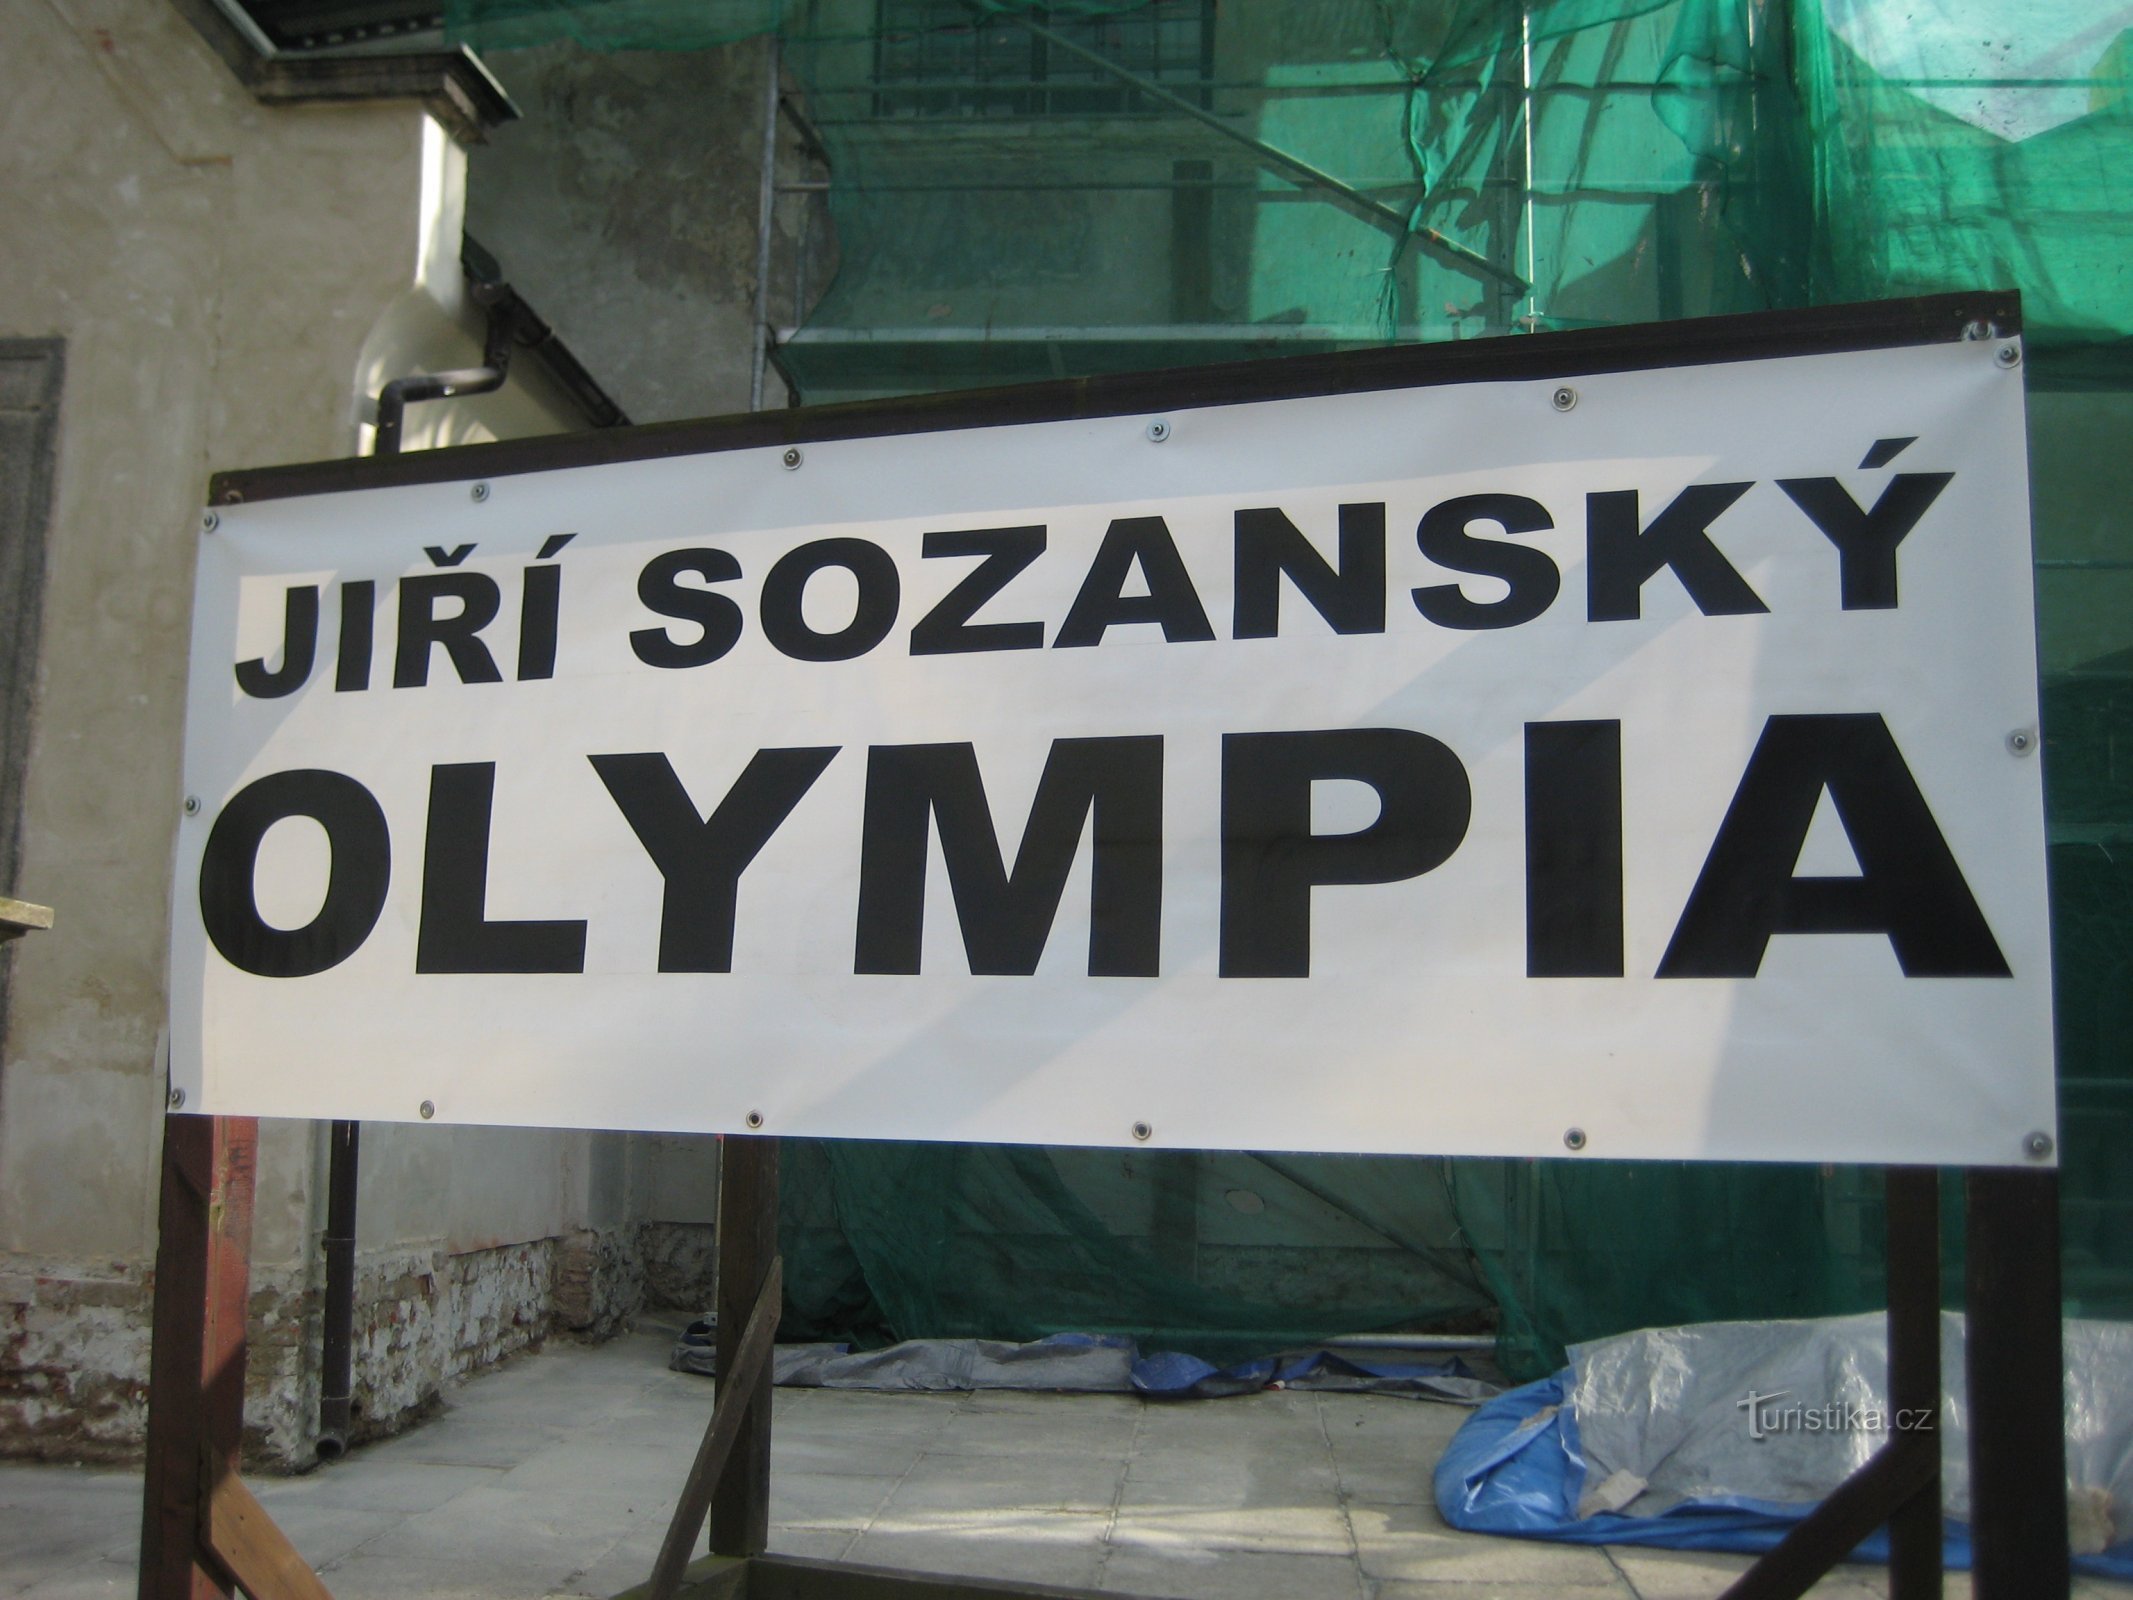 Jiří Sozanský - Olympia - Sokolov kiállítás